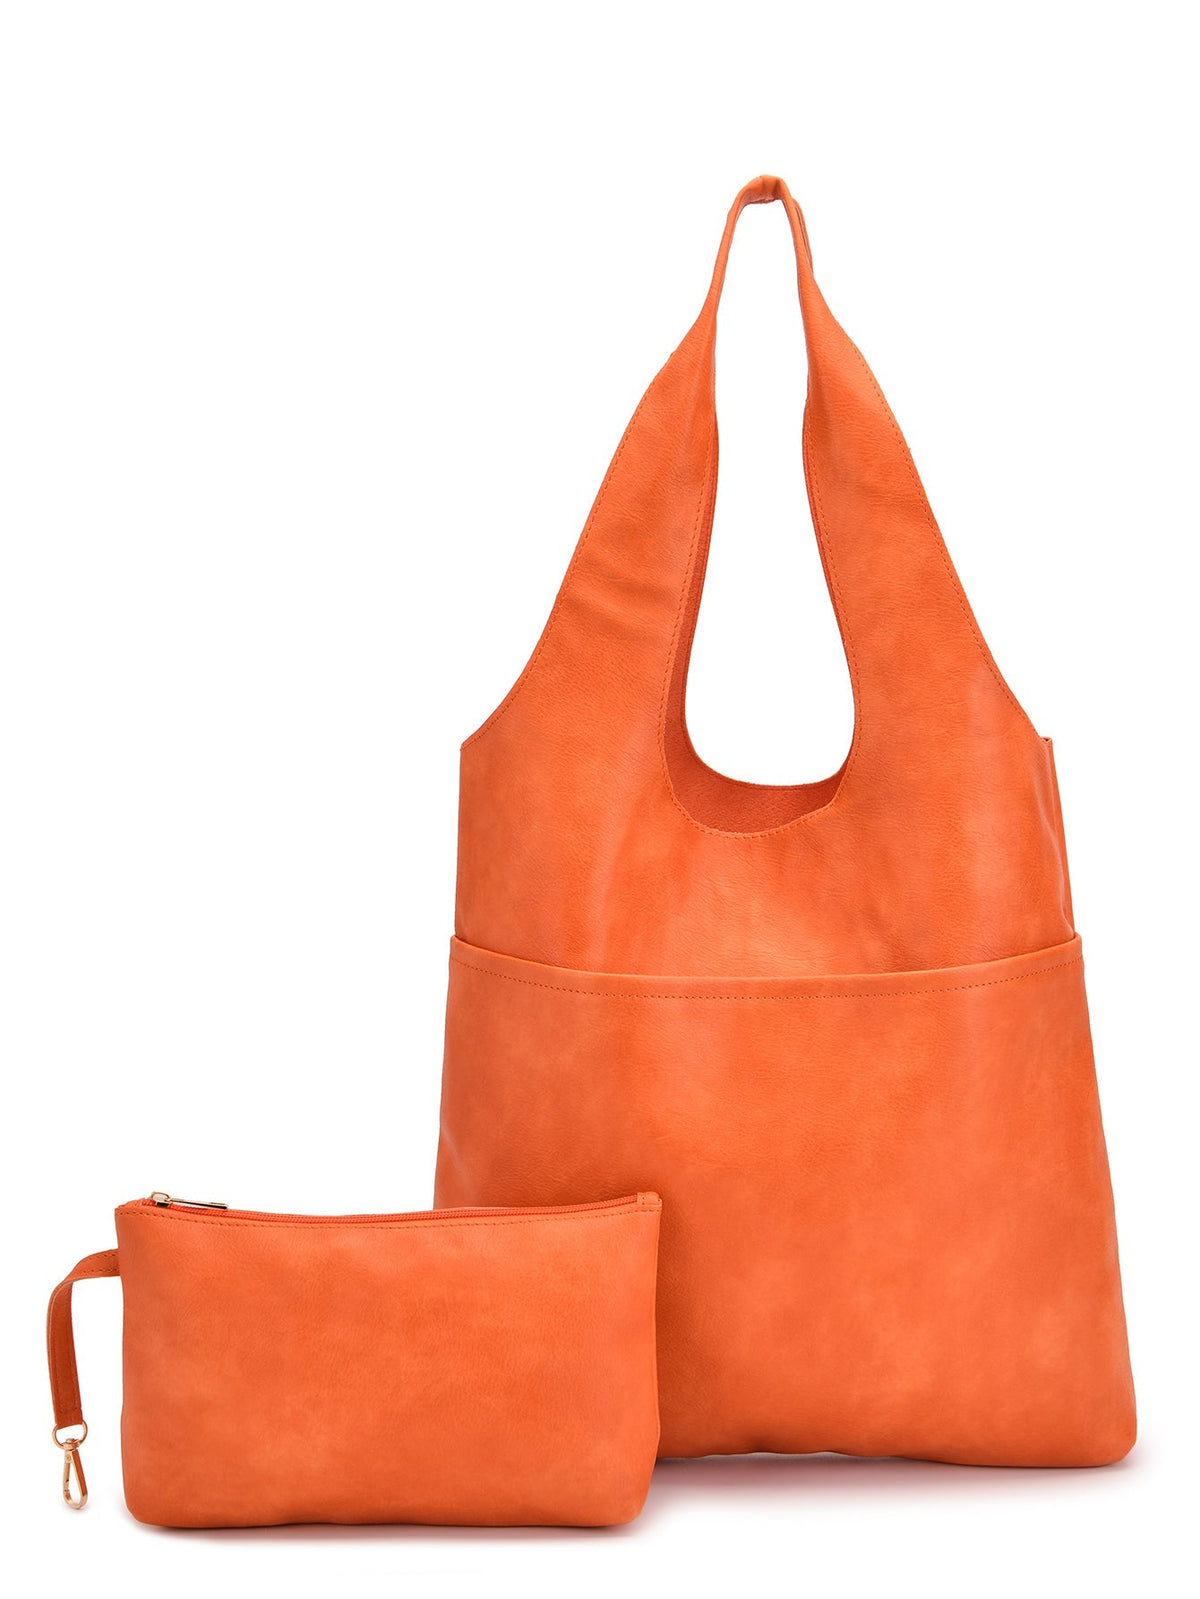 2pcs Women Shoulder Bag Tote bag with Coin bag Sai Feel